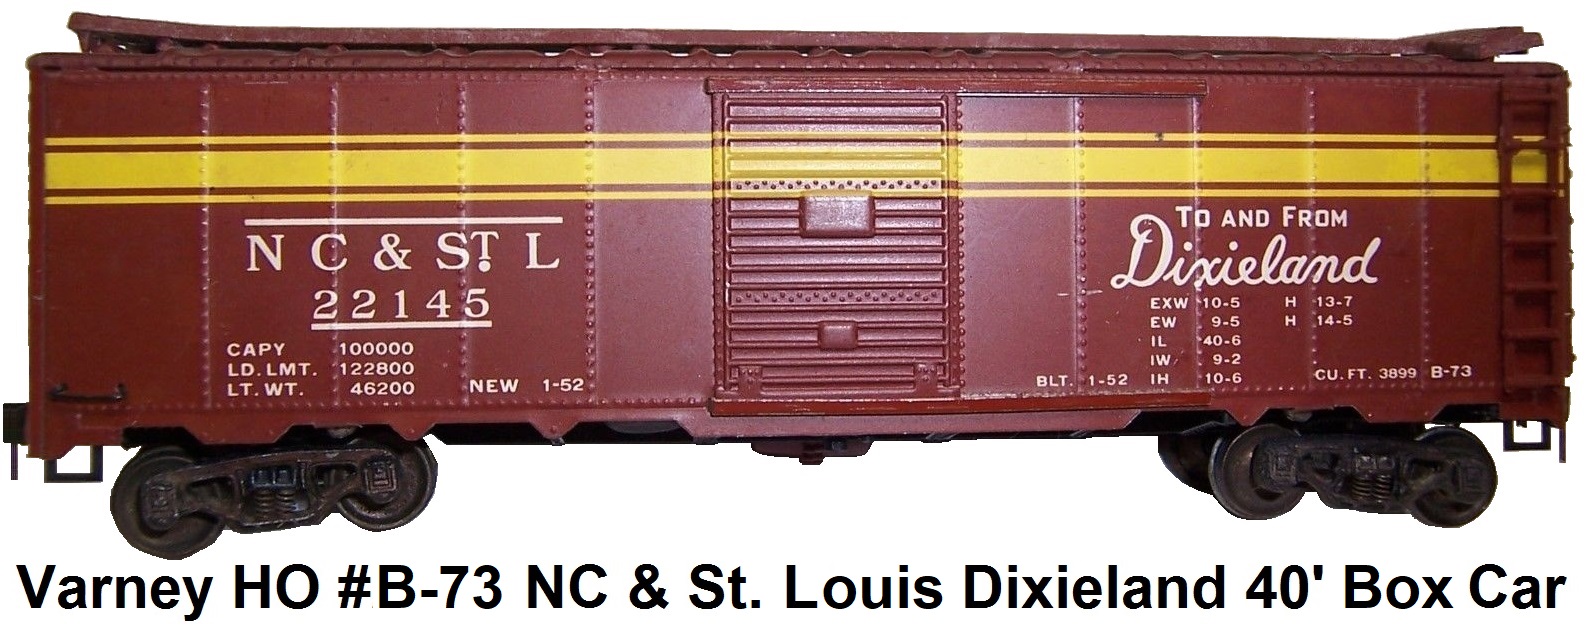 Varney HO #B-73 NC & St. Louis Dixieland 40' Box Car